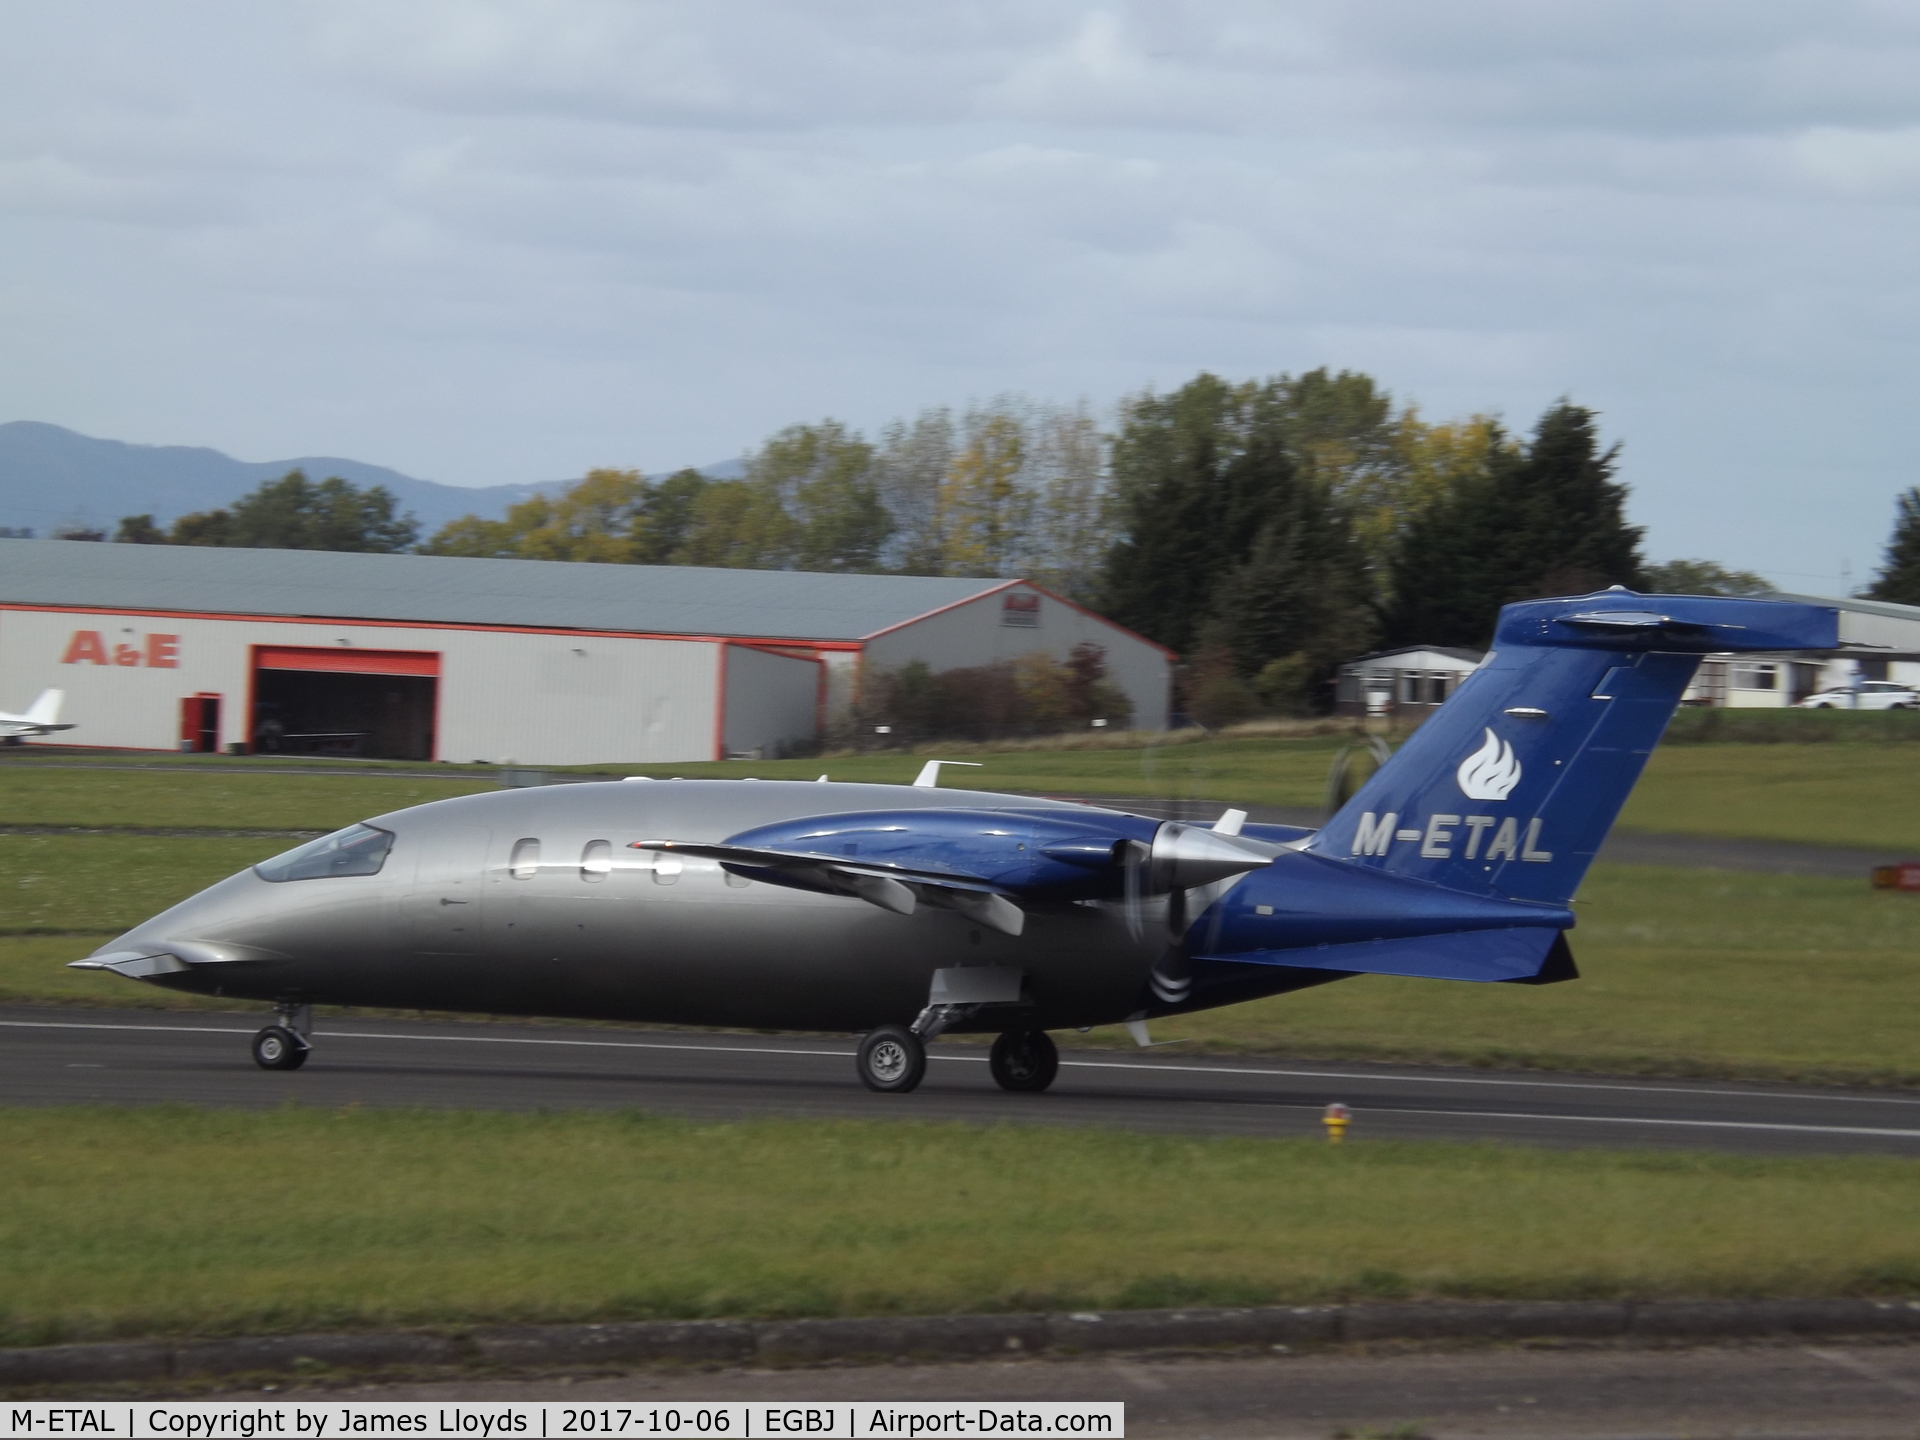 M-ETAL, 2009 Piaggio P-180 Avanti II C/N 1194, Takeing off runway 27 at Gloucestershire Airport.